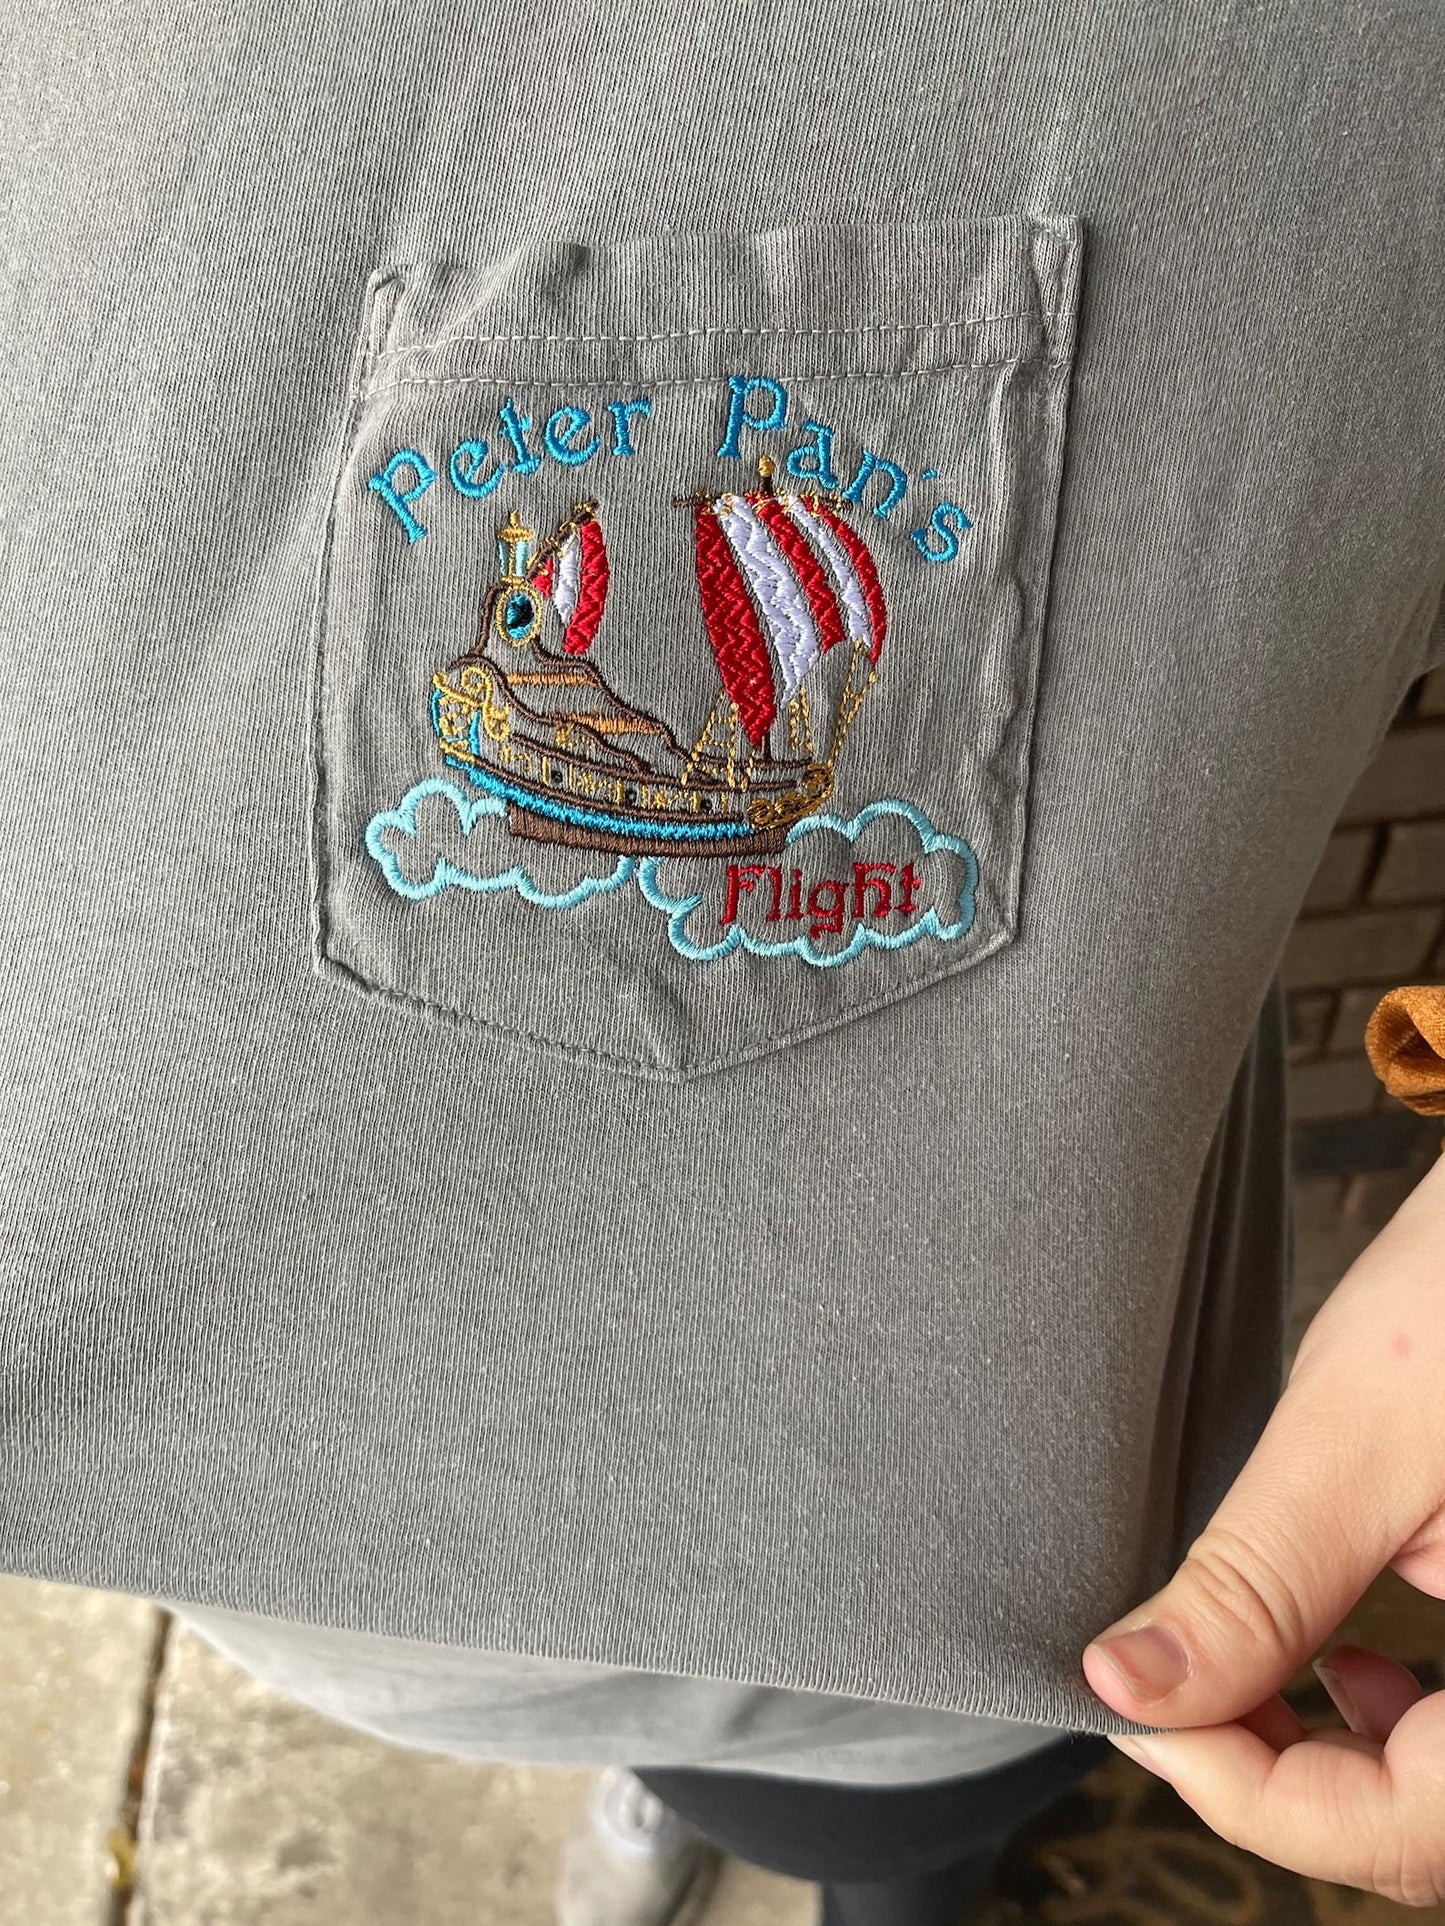 Peter Pan's Flight Comfort Color Pocket T-shirt